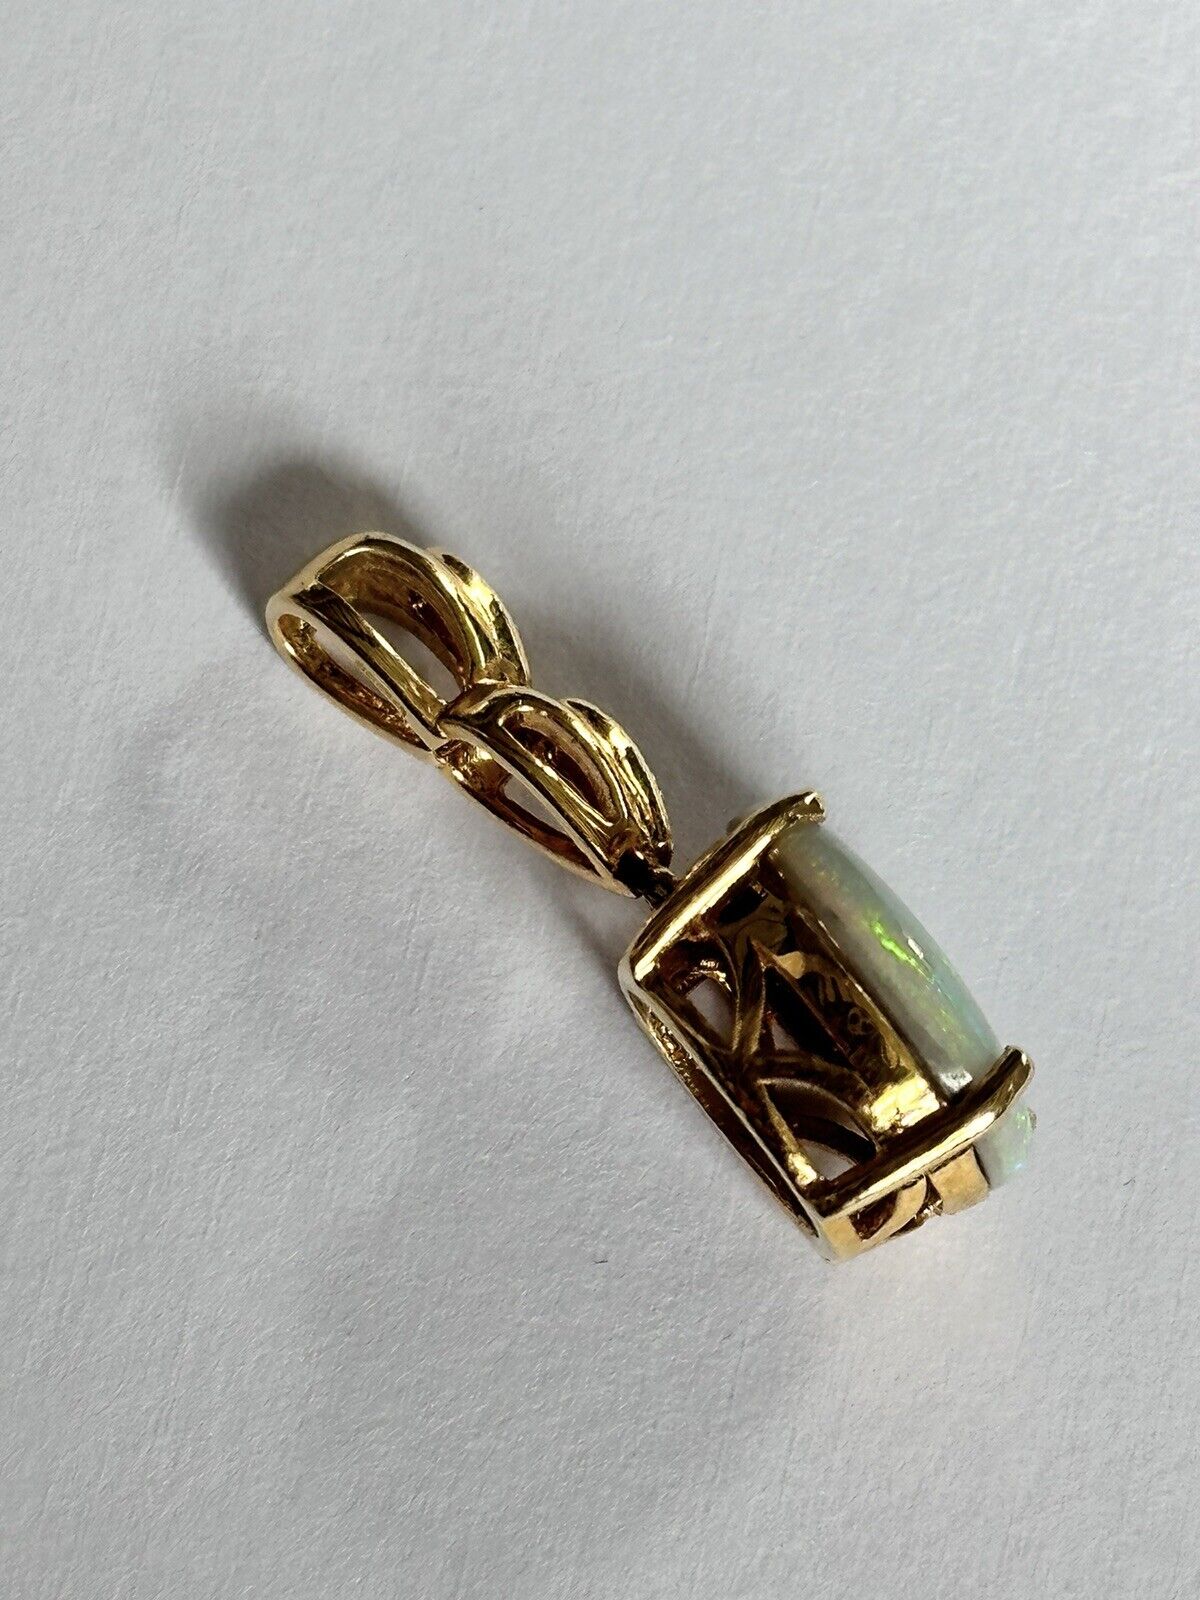 Vintage 18ct Gold White Opal Green Fire Diamond Pendant